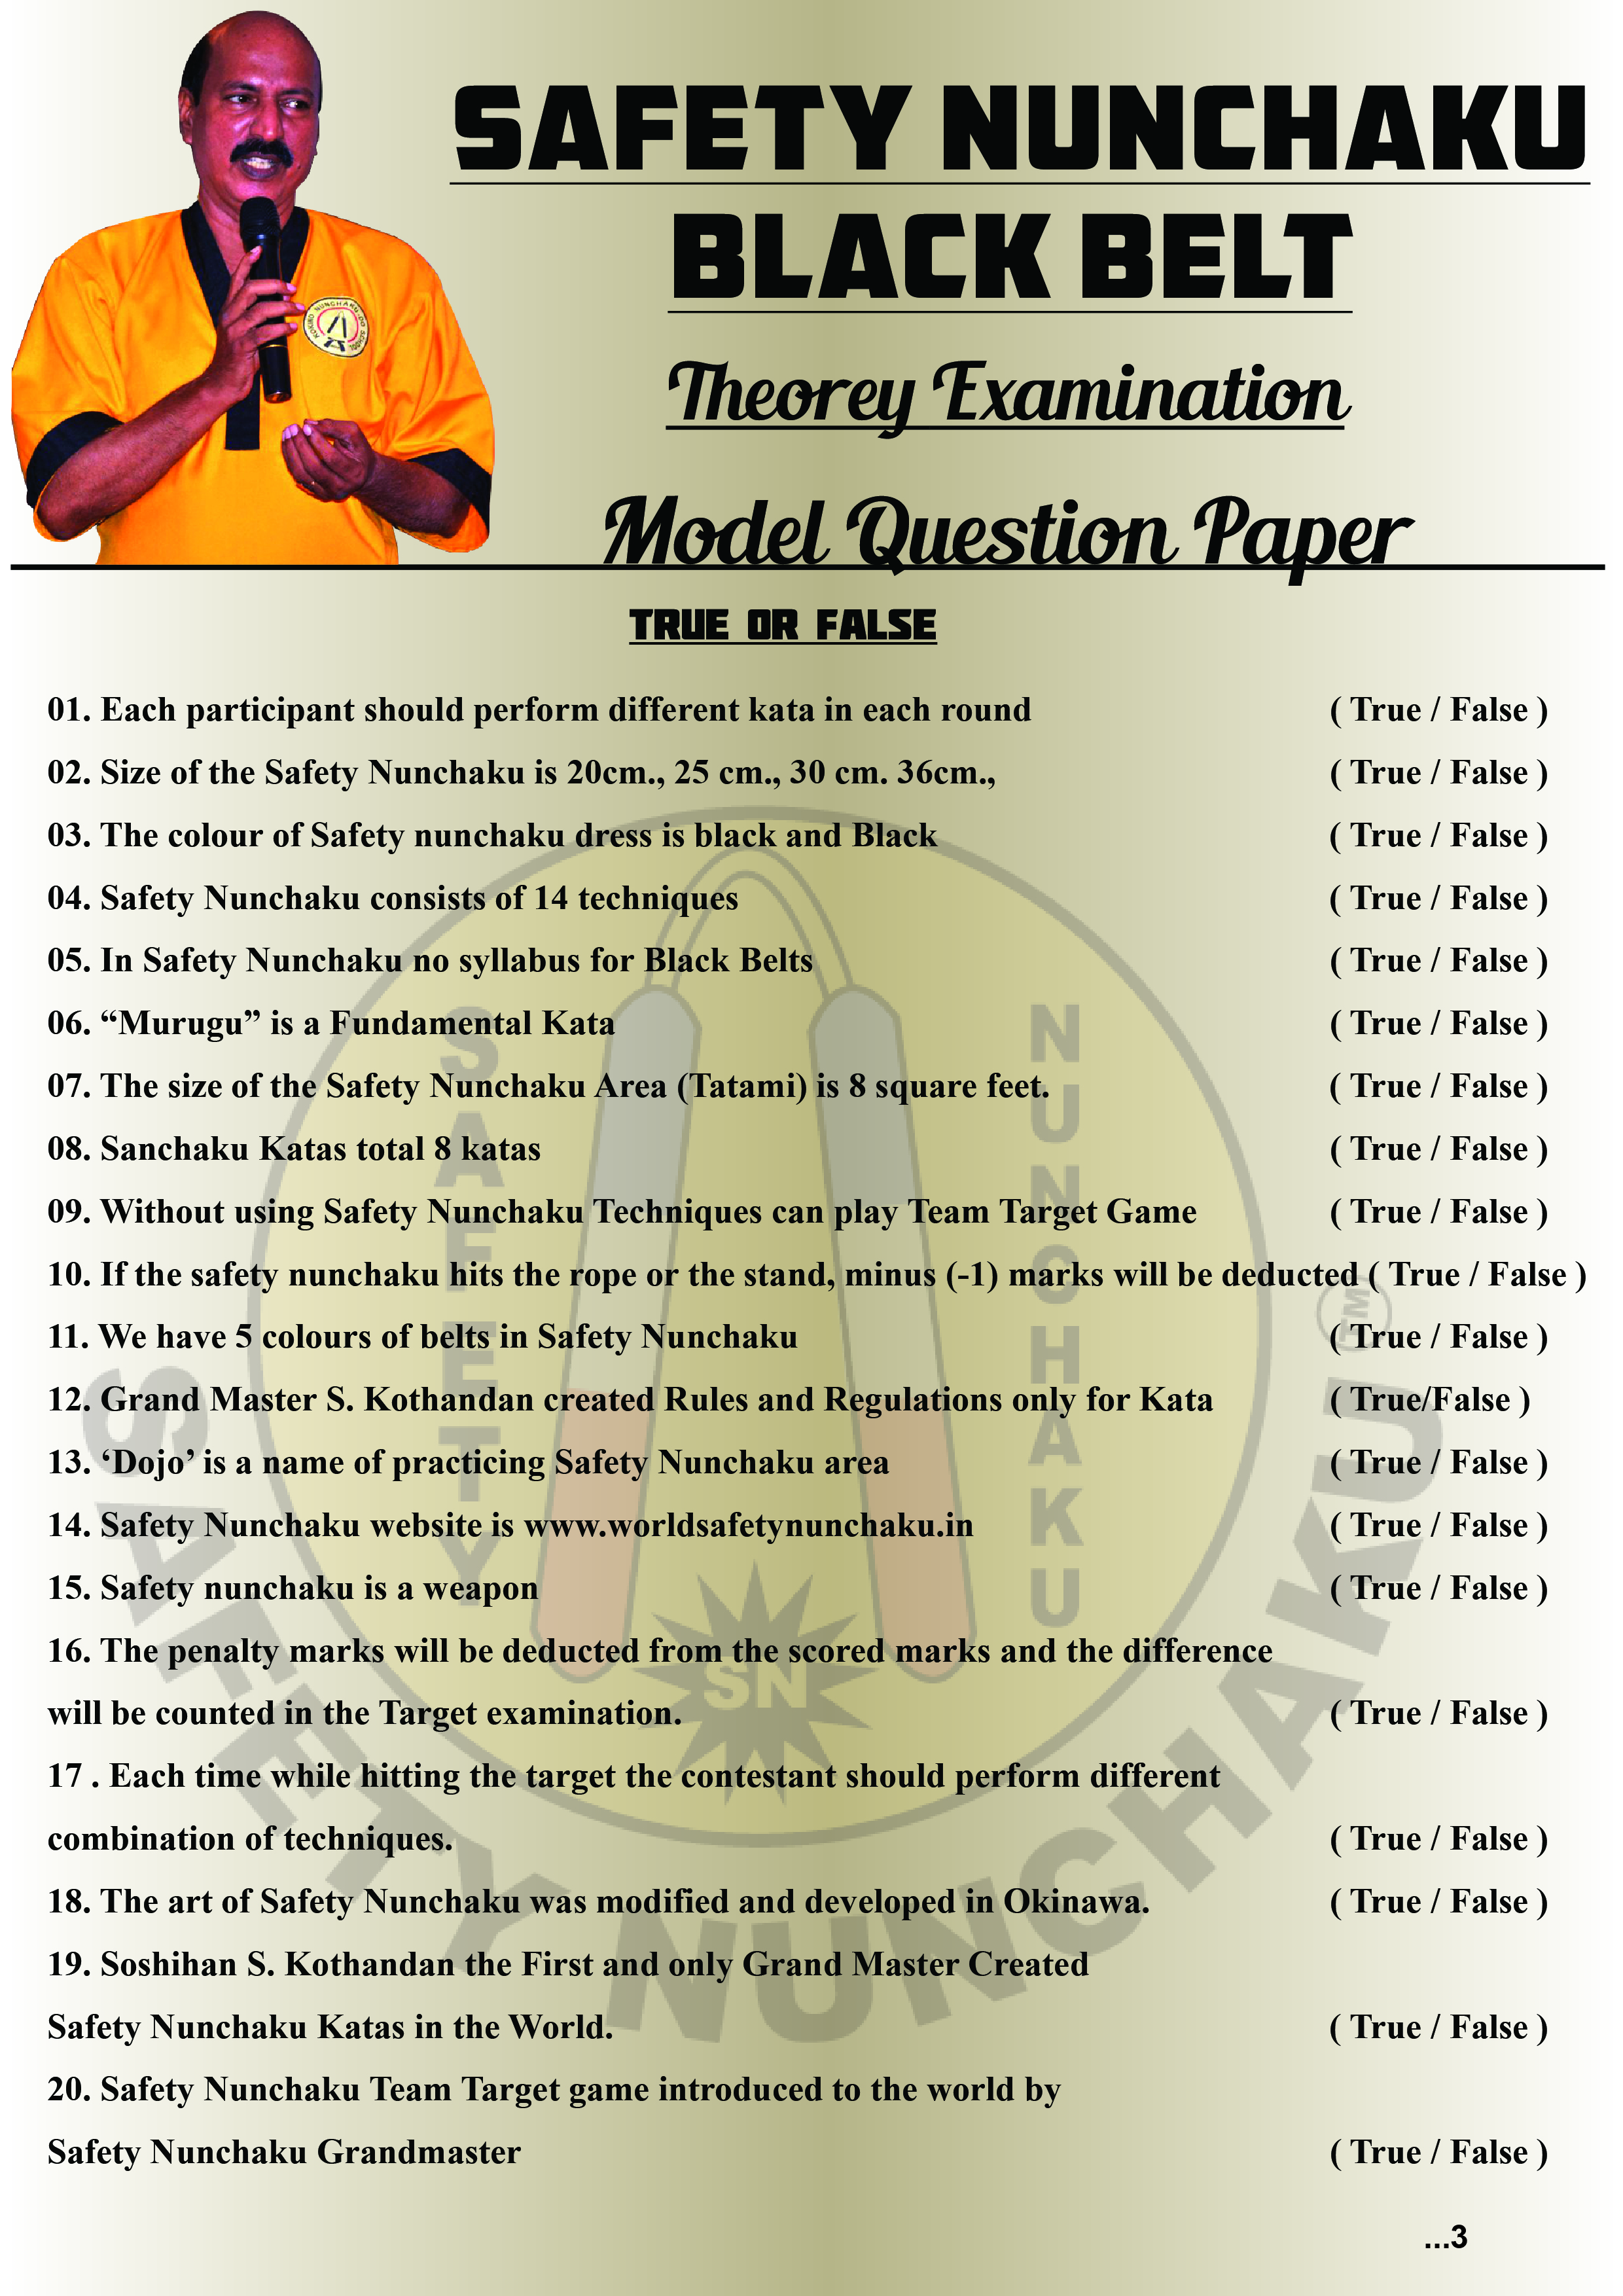 BlackBelt Theorey Model Examination Question Paper